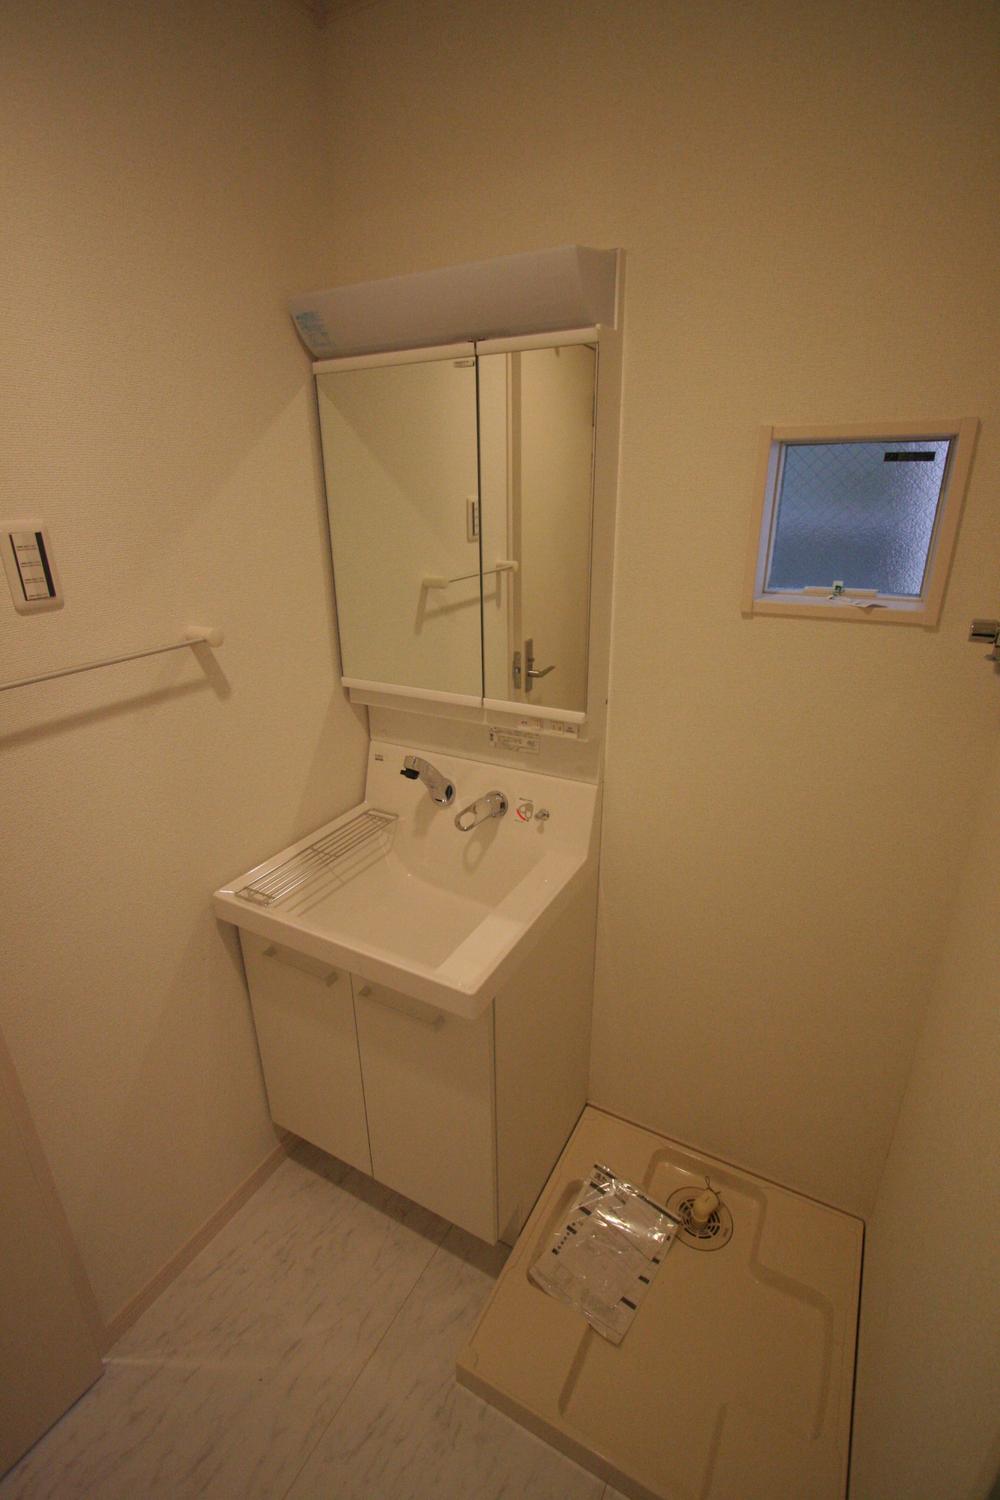 Wash basin, toilet. December 2013 shooting